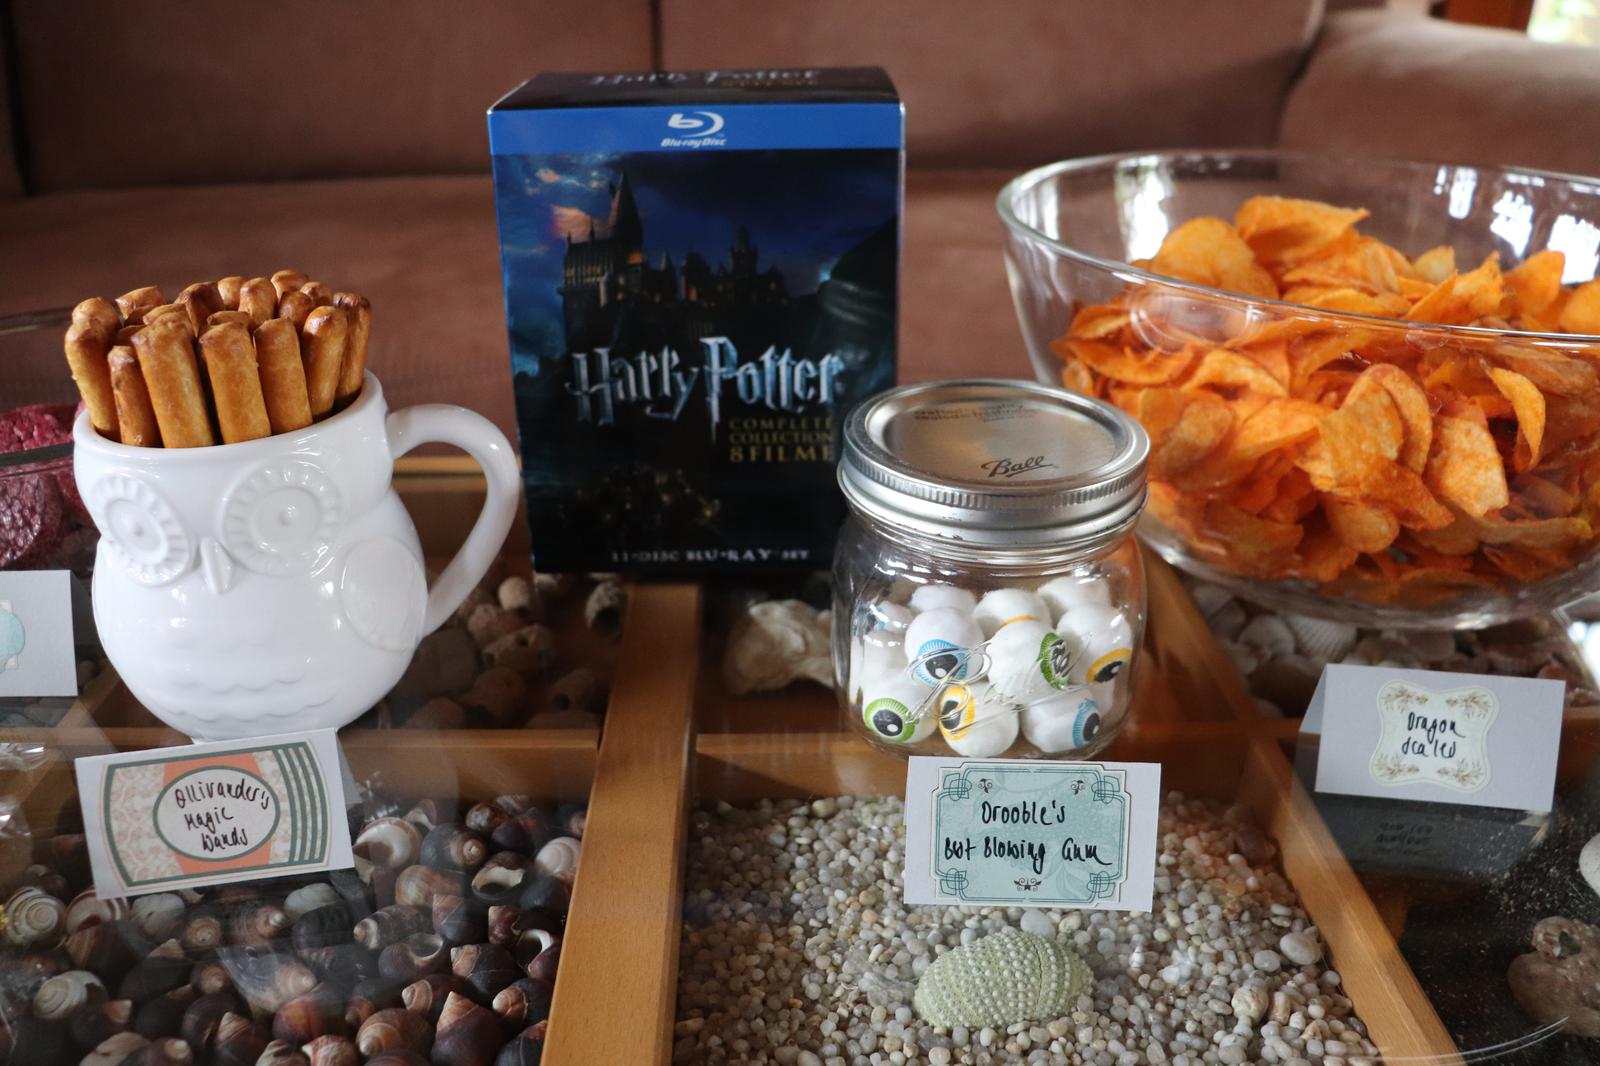 Harry Potter Filmabend|Harry-Potter-Fans|Potterhead|Potterheads|Filmabend|Harry-Potter-Süßigkeiten|Süßigkeiten für die Harry Potter Party |Harry Potter Süßigkeiten|Harry Potter Sweets